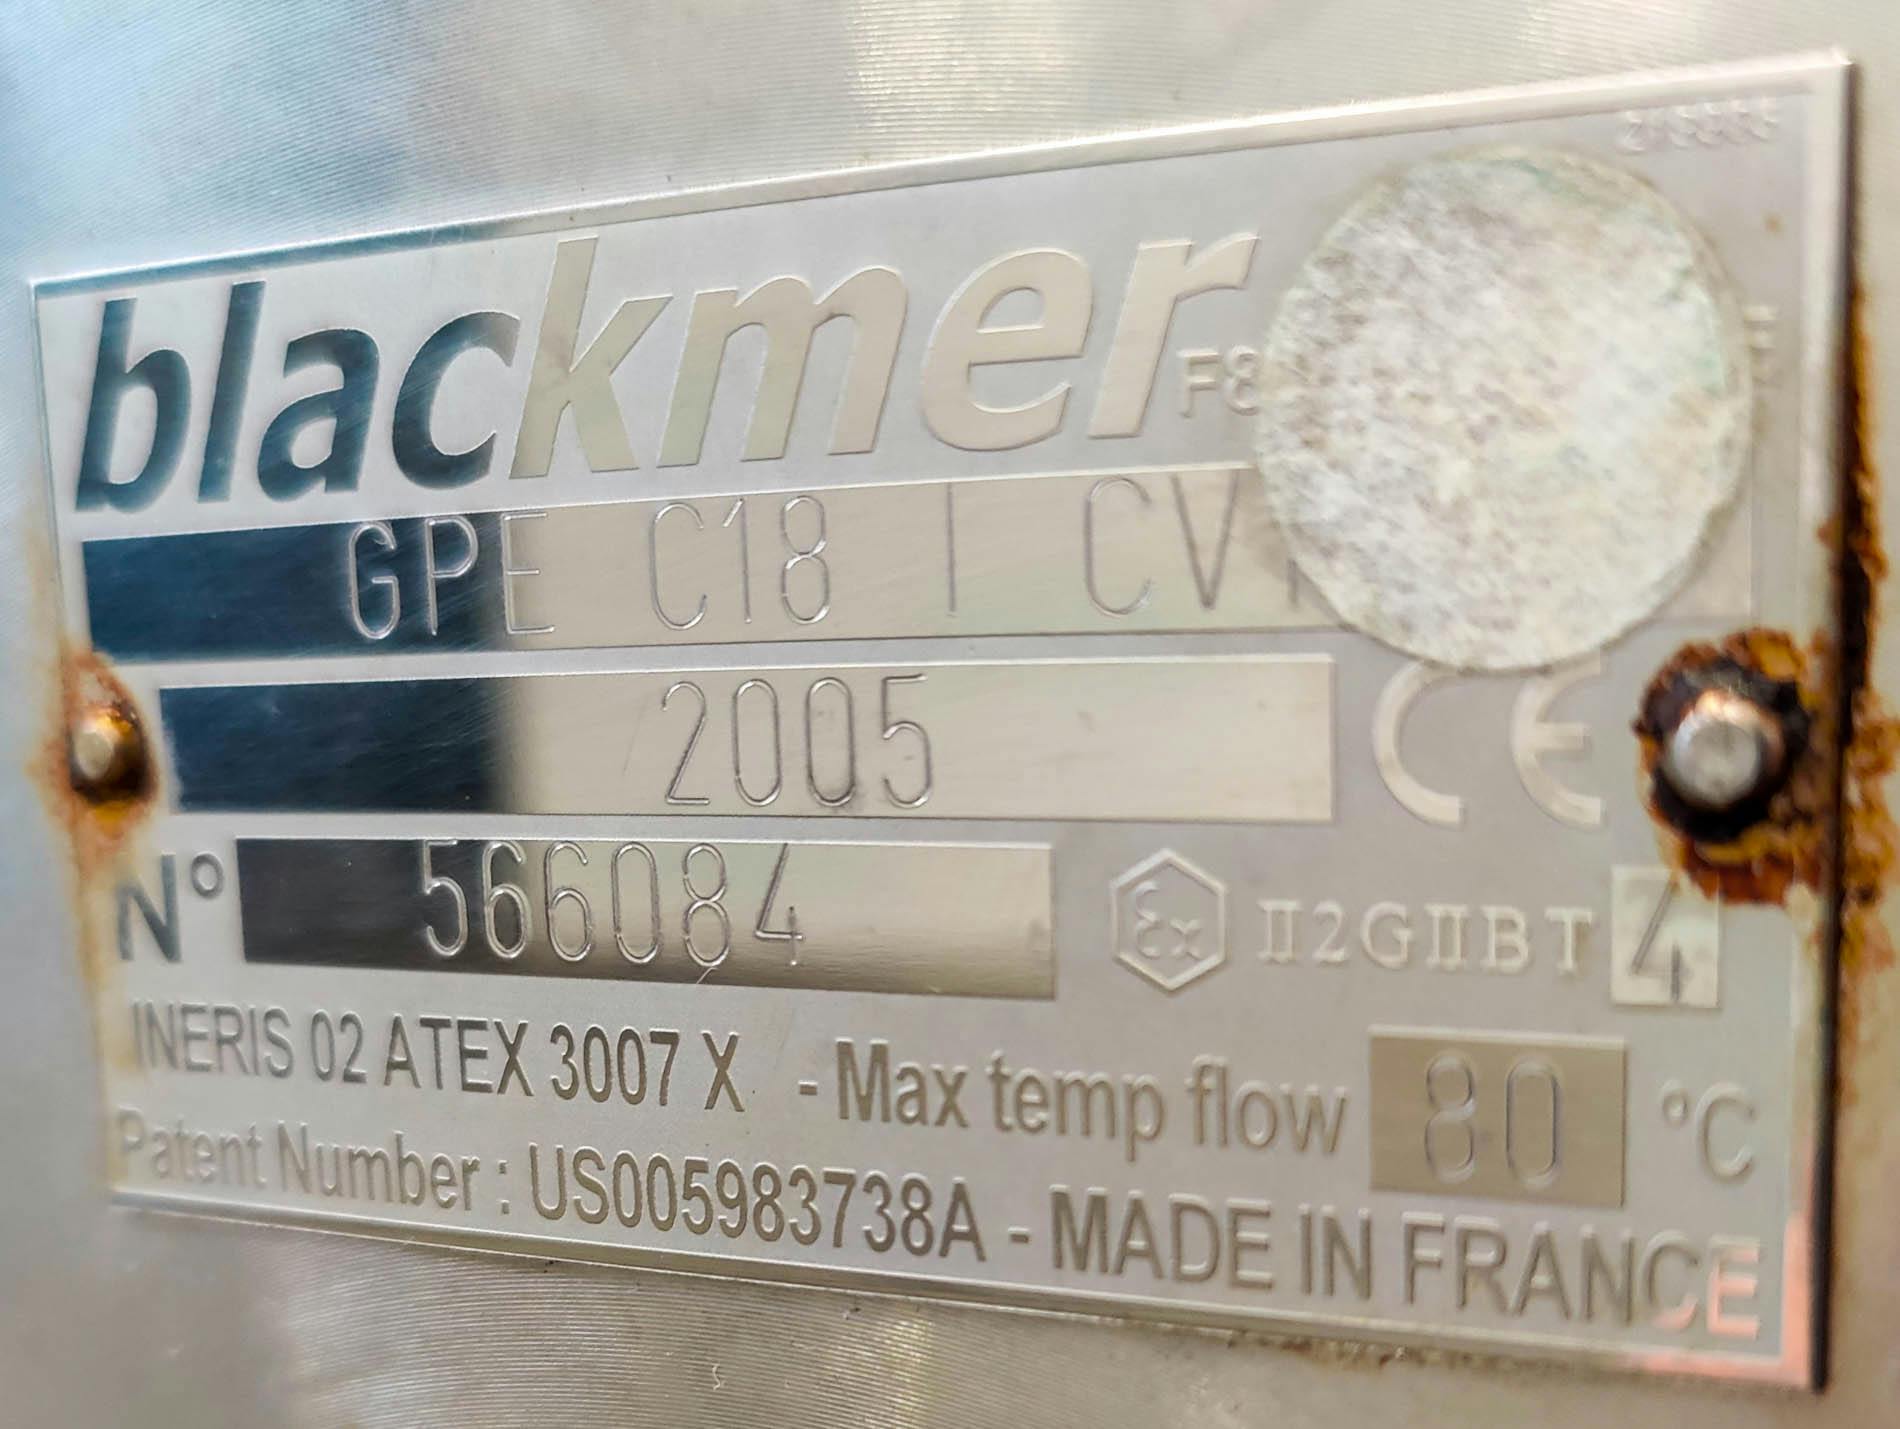 Blackmer GPI C18 I CV - Pompa a vite eccentrica - image 11